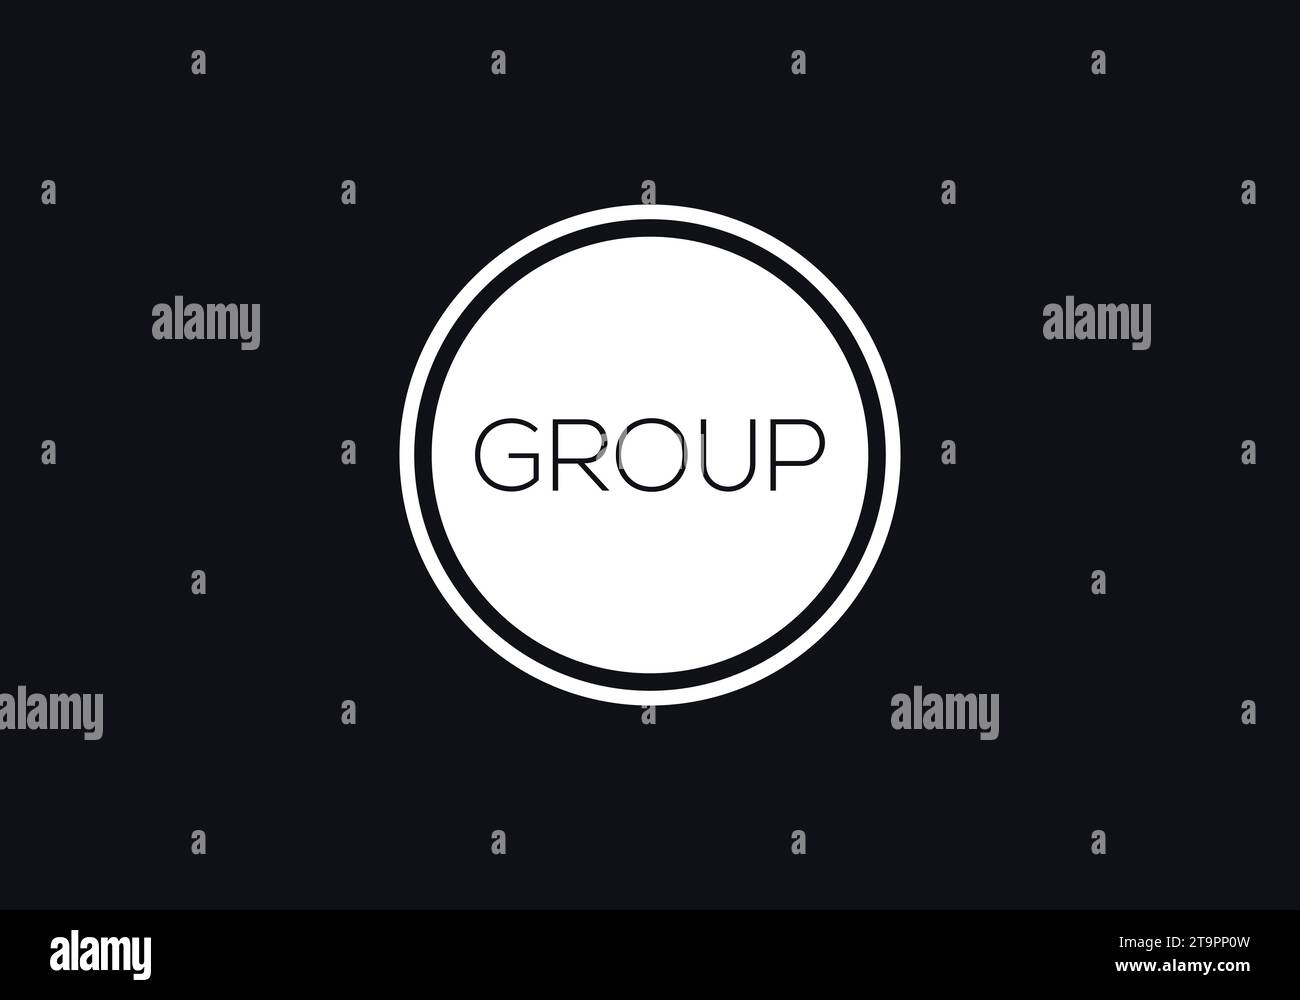 Group Text Vector Template. Abstract text circle design Stock Vector